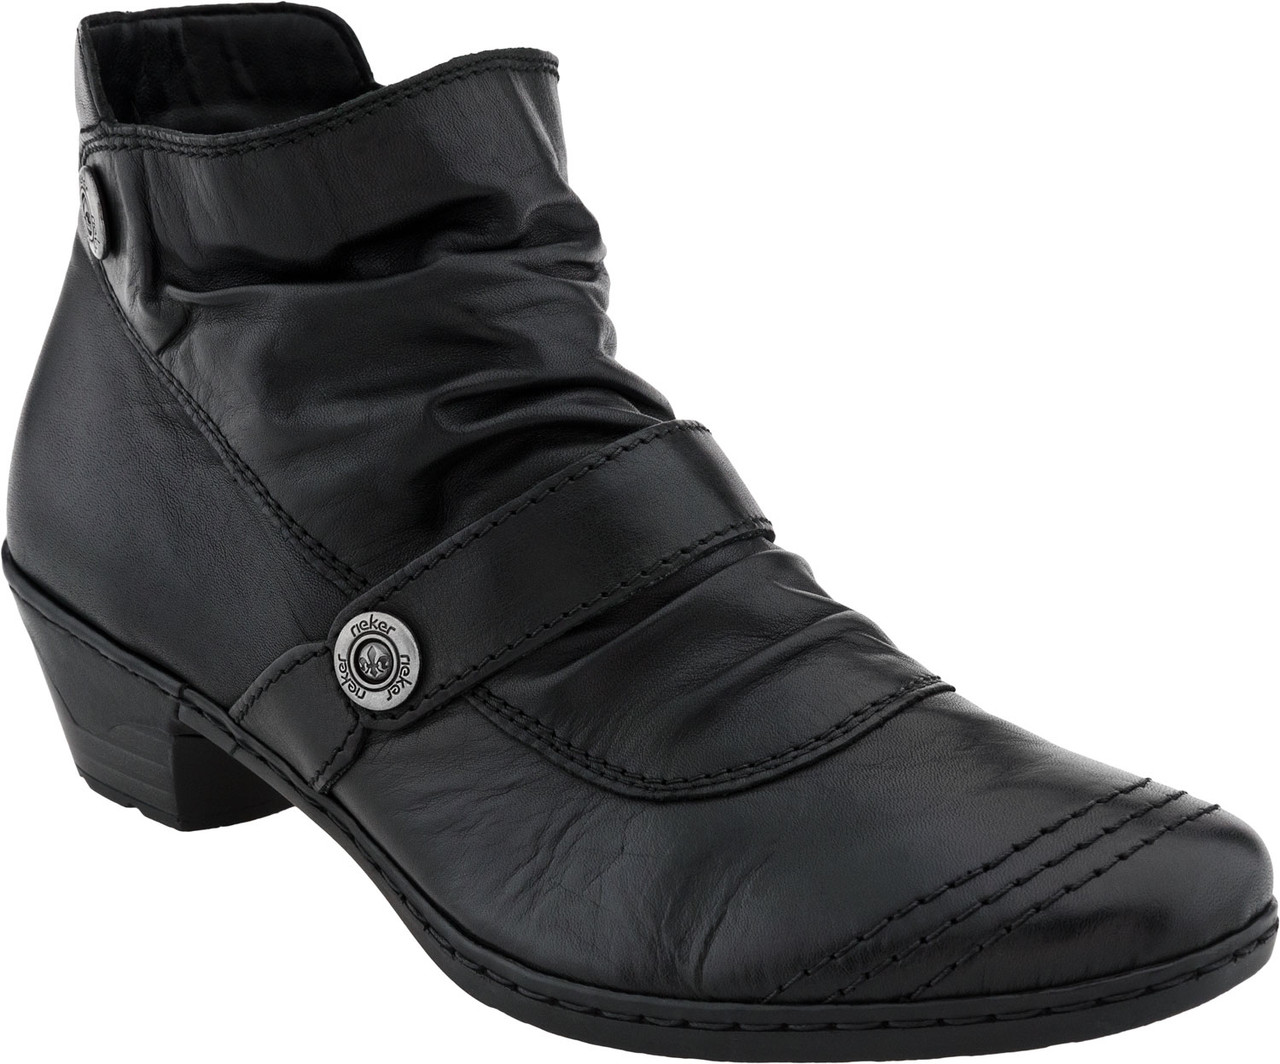 letterlijk Toegangsprijs kust Rieker Women's Lynn 63 Boots Black - Black | Discount Rieker Ladies Boots &  More - Shoolu.com | Shoolu.com